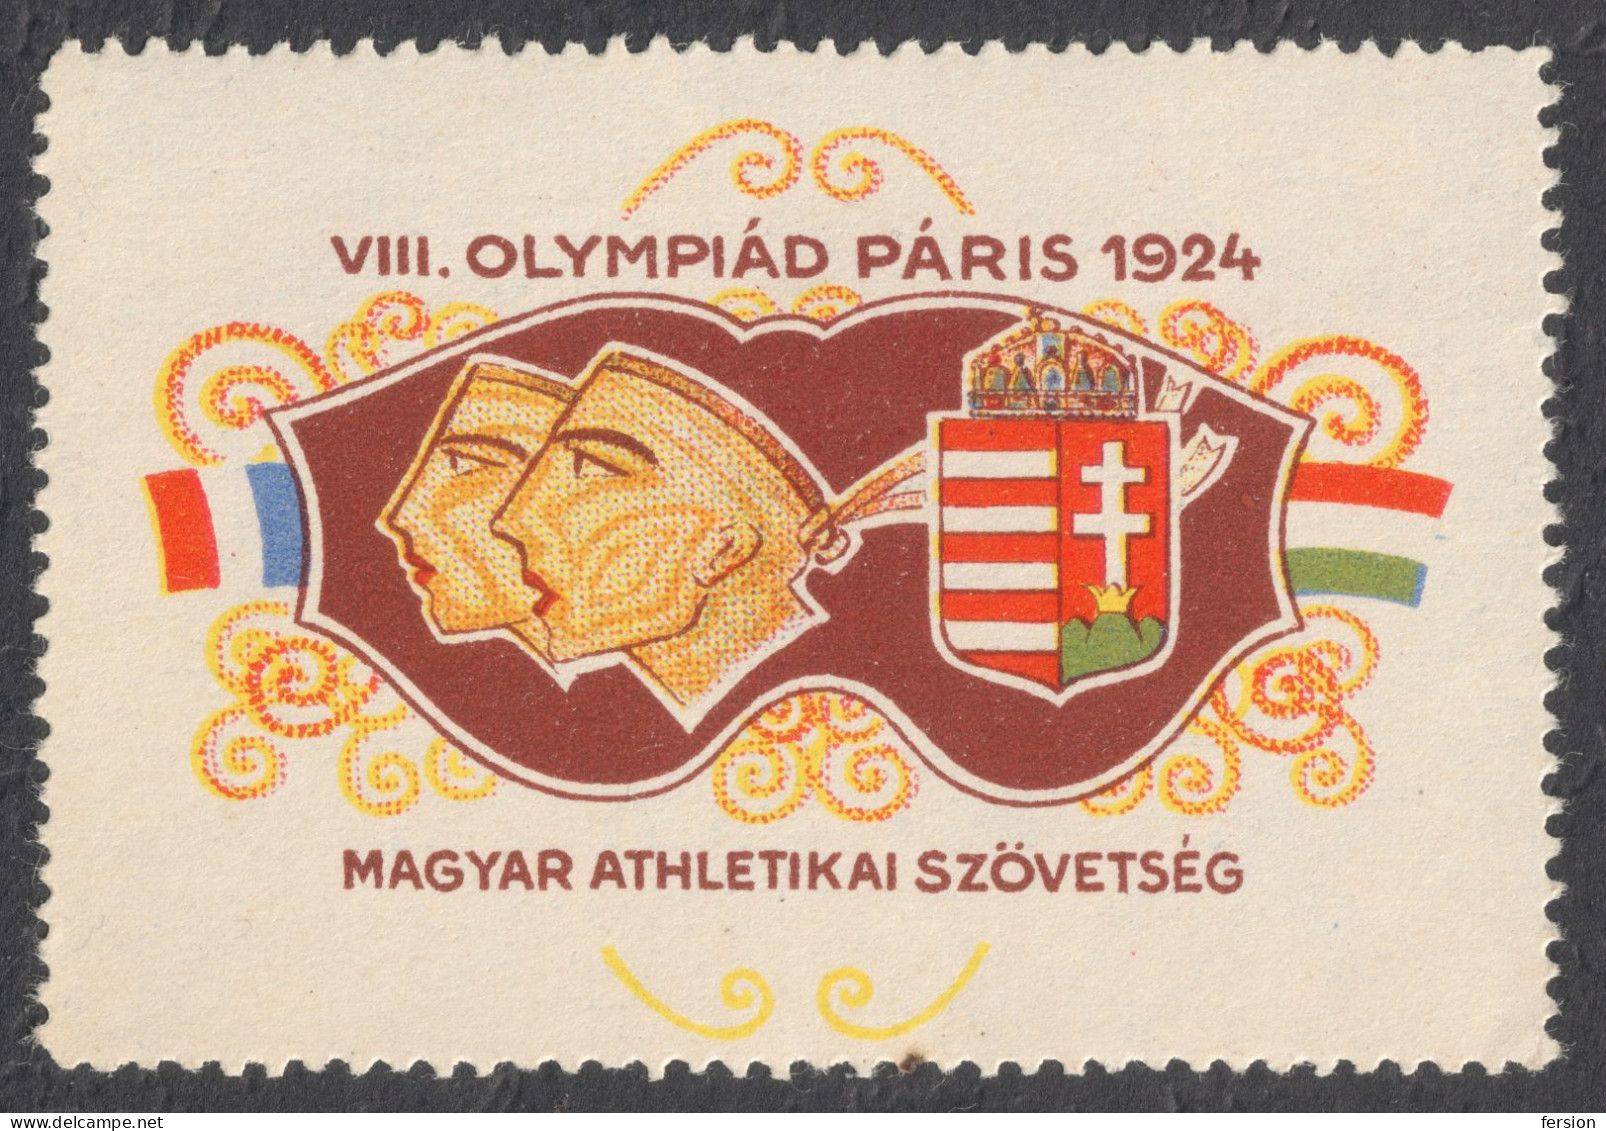 Paris 1924 Olympics Olympic GAMES / France Hungary Athletics MH - LABEL CINDERELLA VIGNETTE FLAG / Coat Of Arms - Summer 1924: Paris